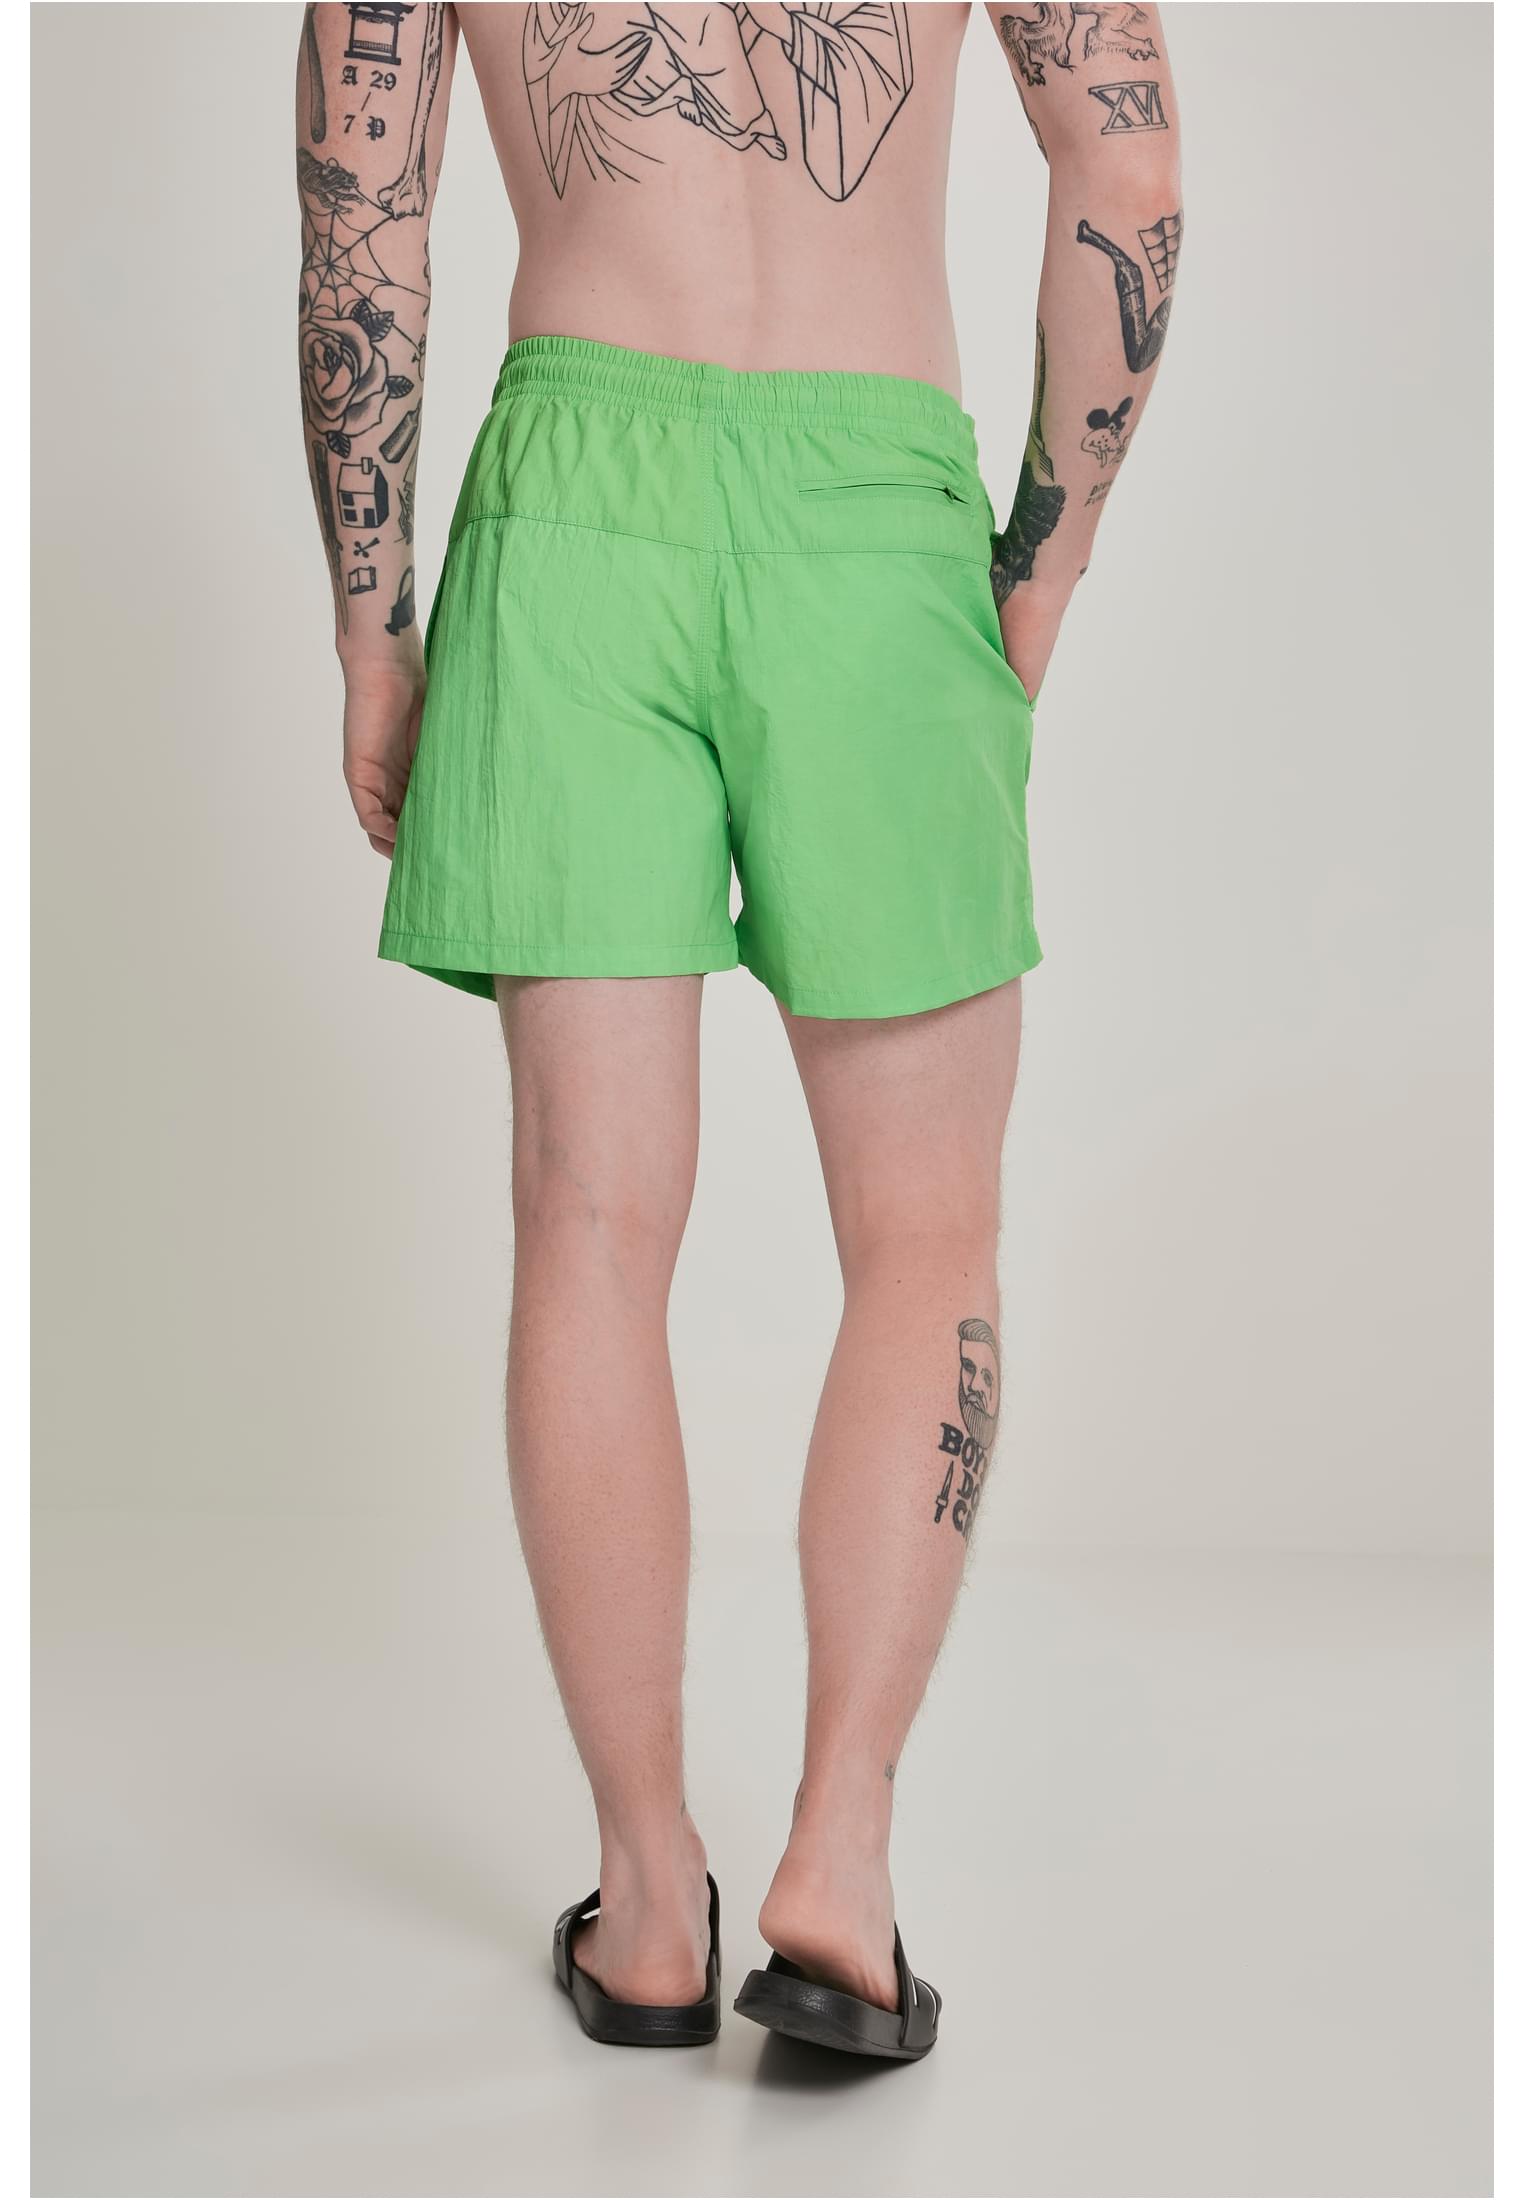 Plus Size Block Swim Shorts in Farbe neongreen